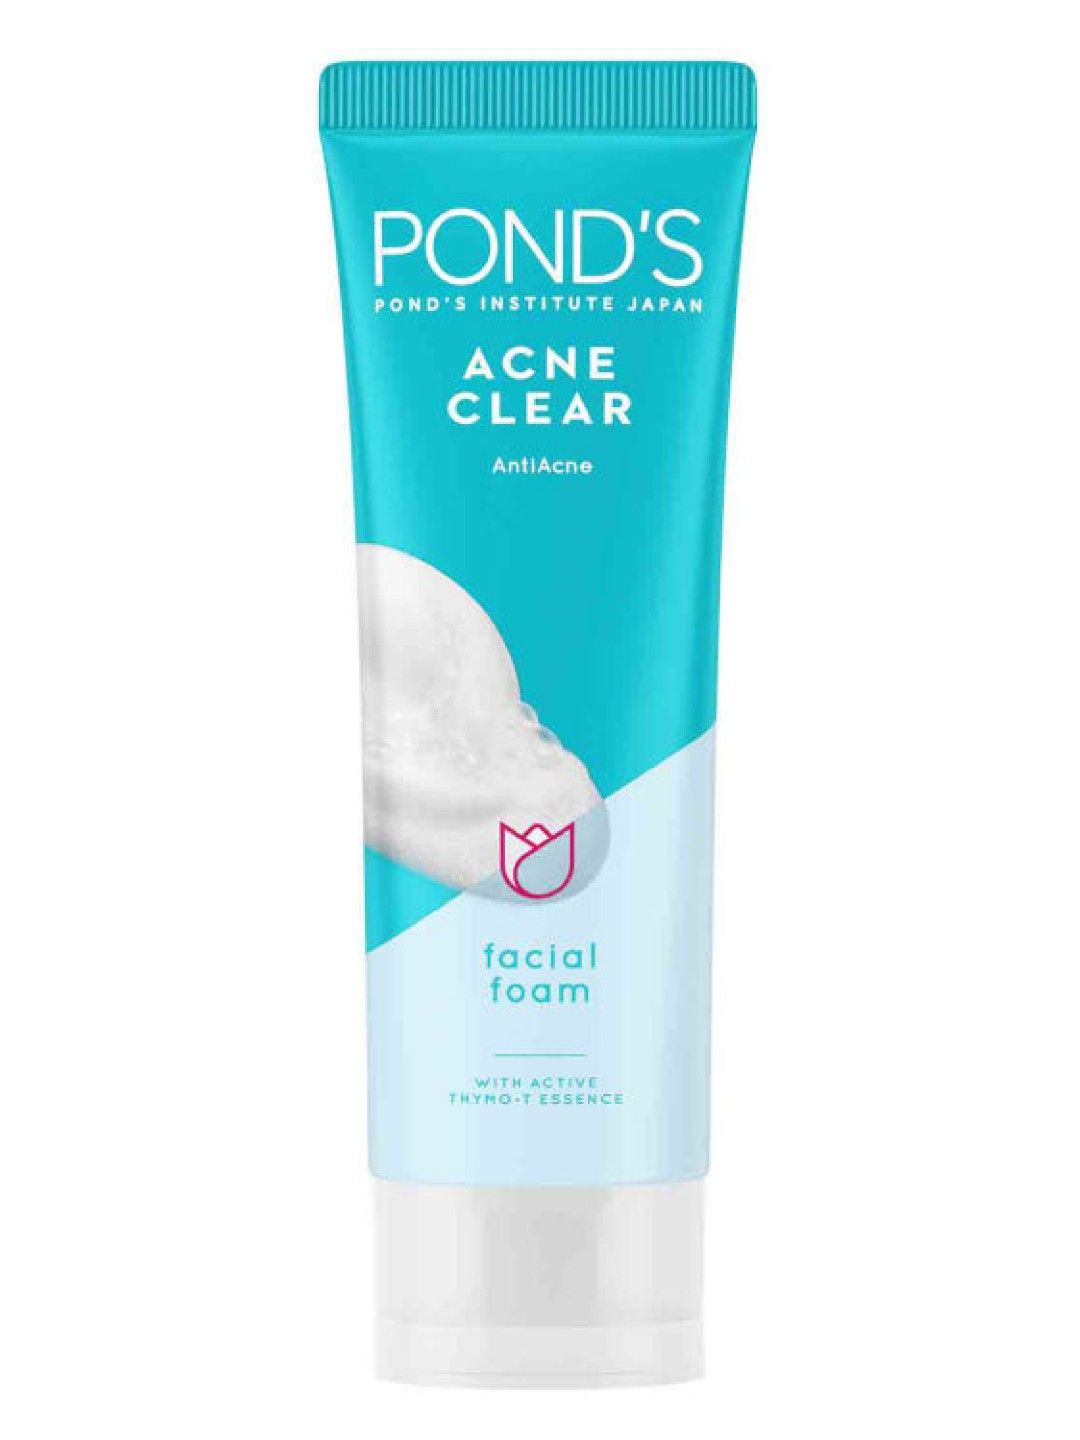 Pond's Acne Clear Anti-Acne Facial Foam (100g)